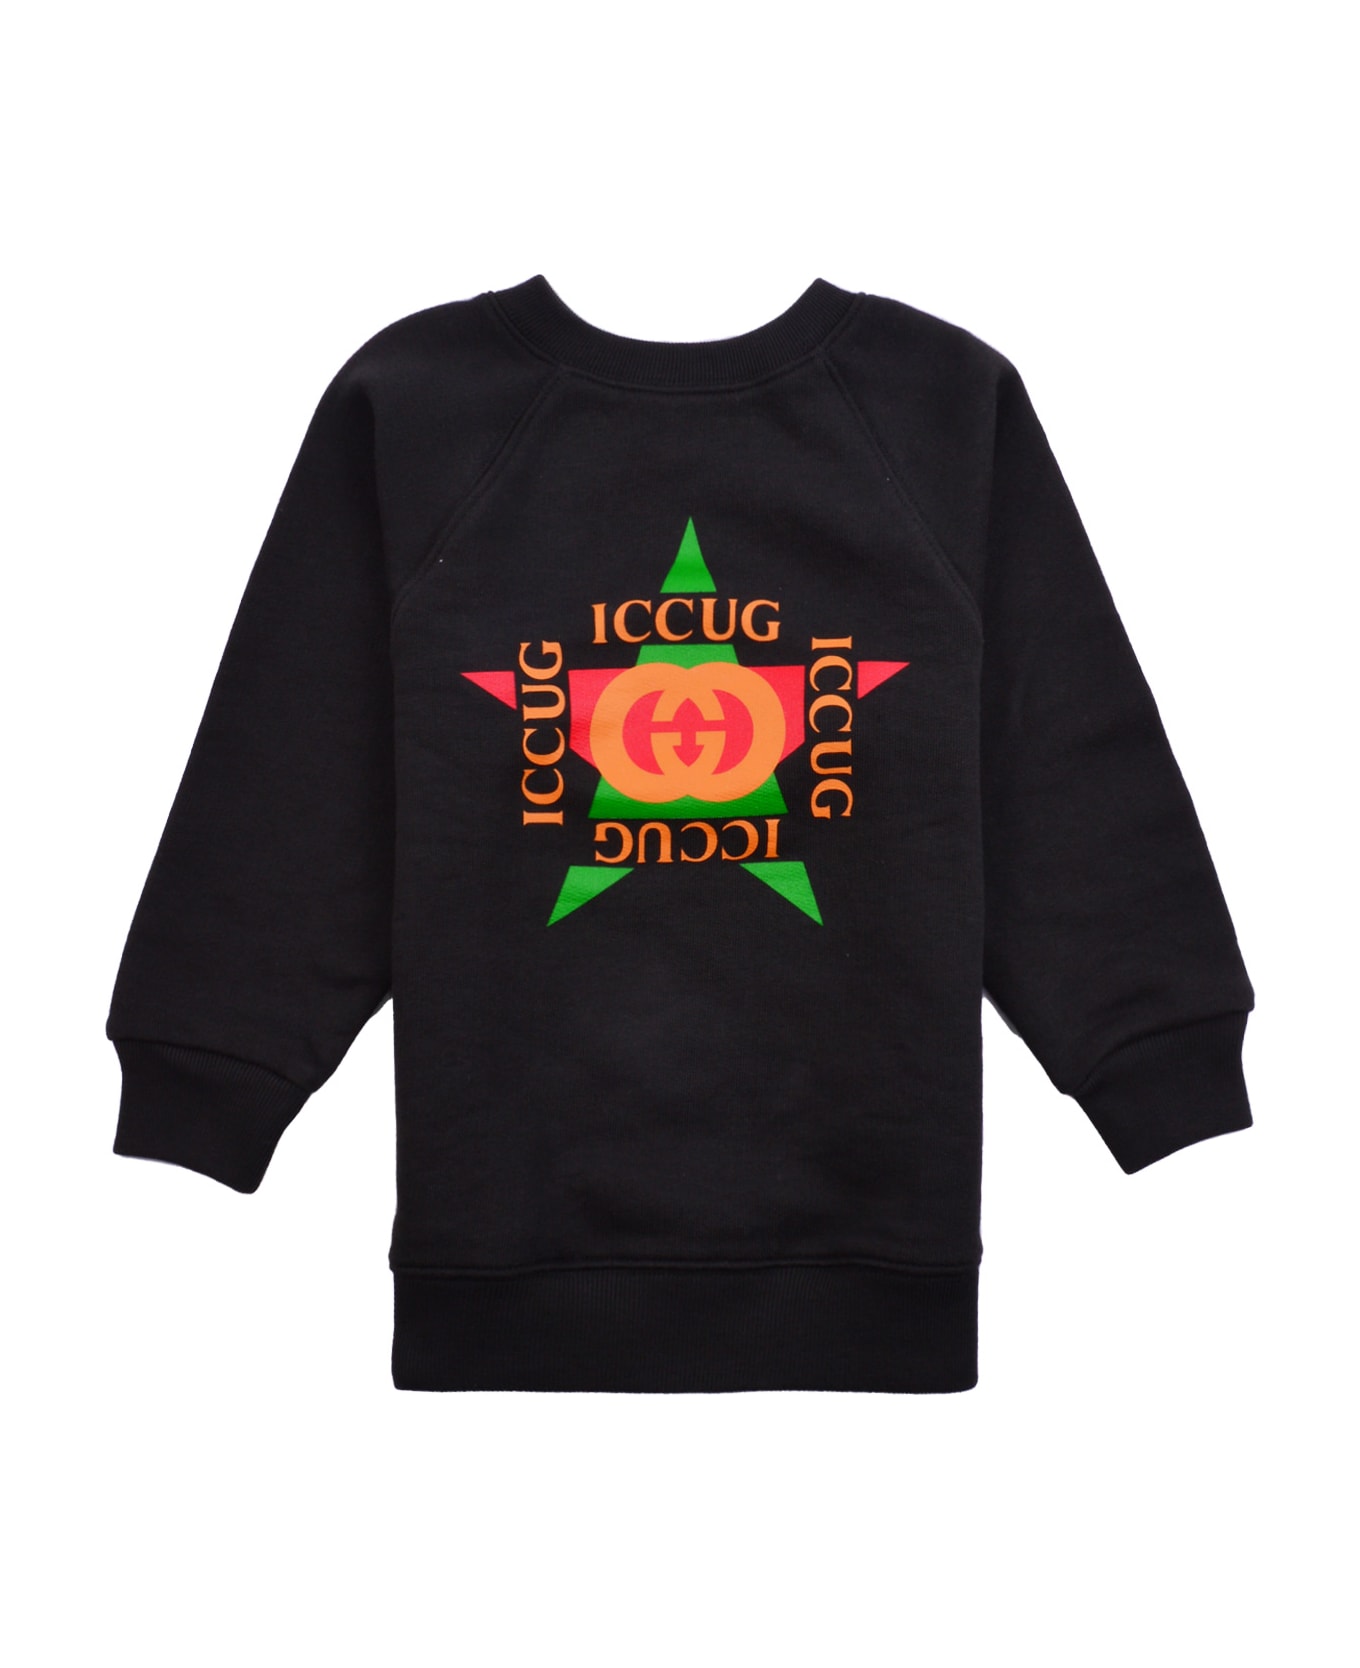 Gucci Printed Sweatshirt - Back